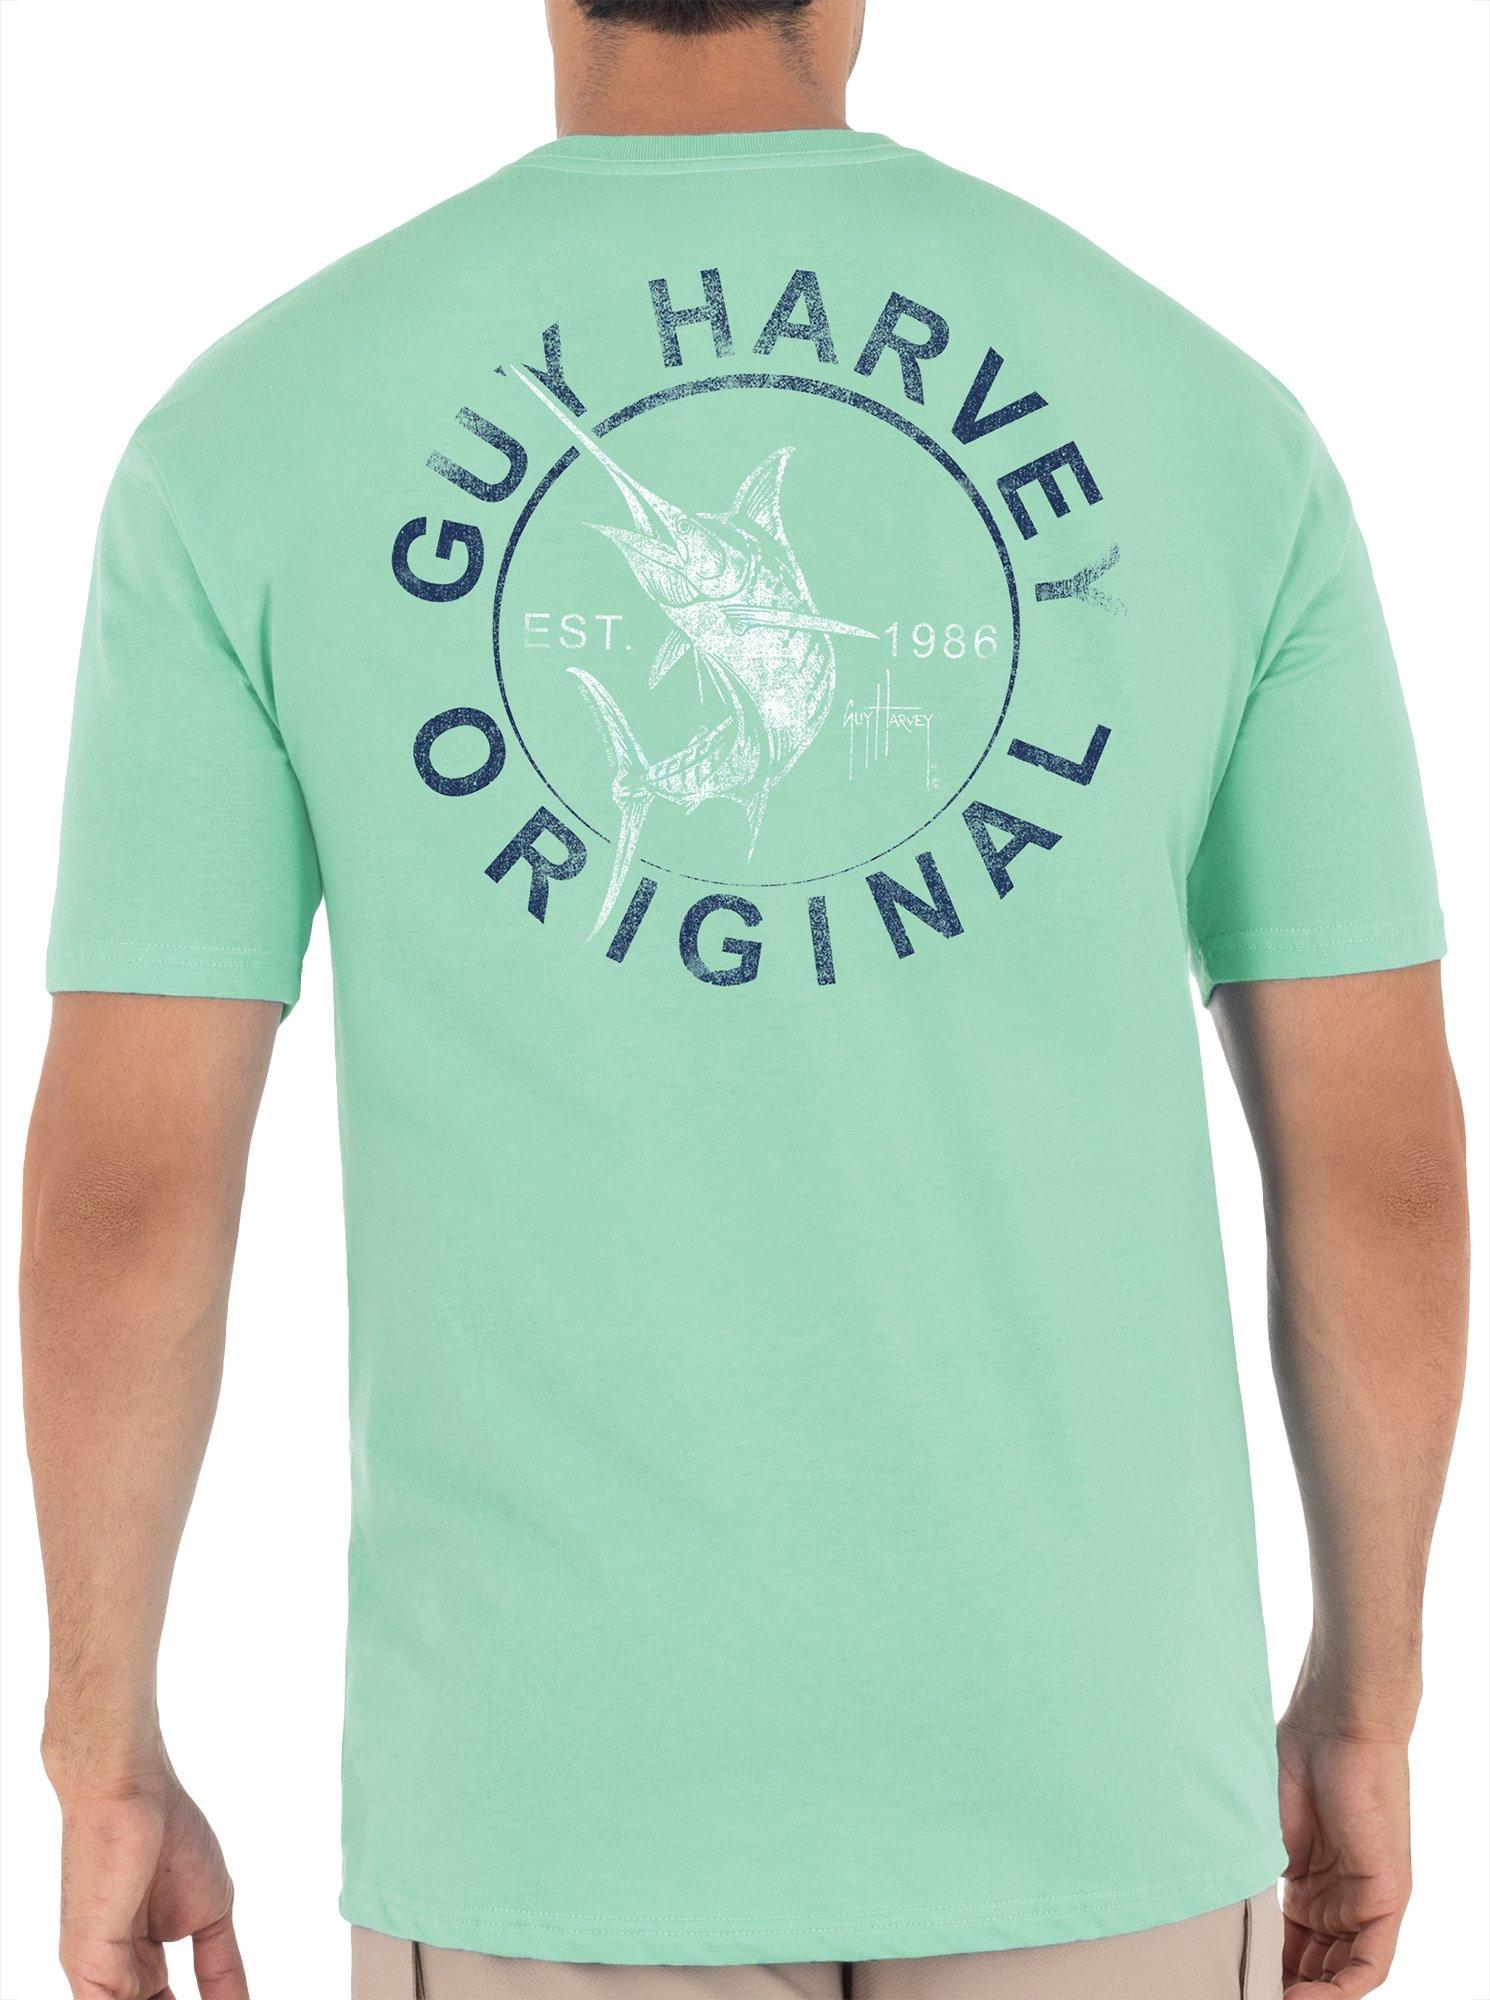 Guy Harvey Mens Circle Marlin Short Sleeve T-Shirt